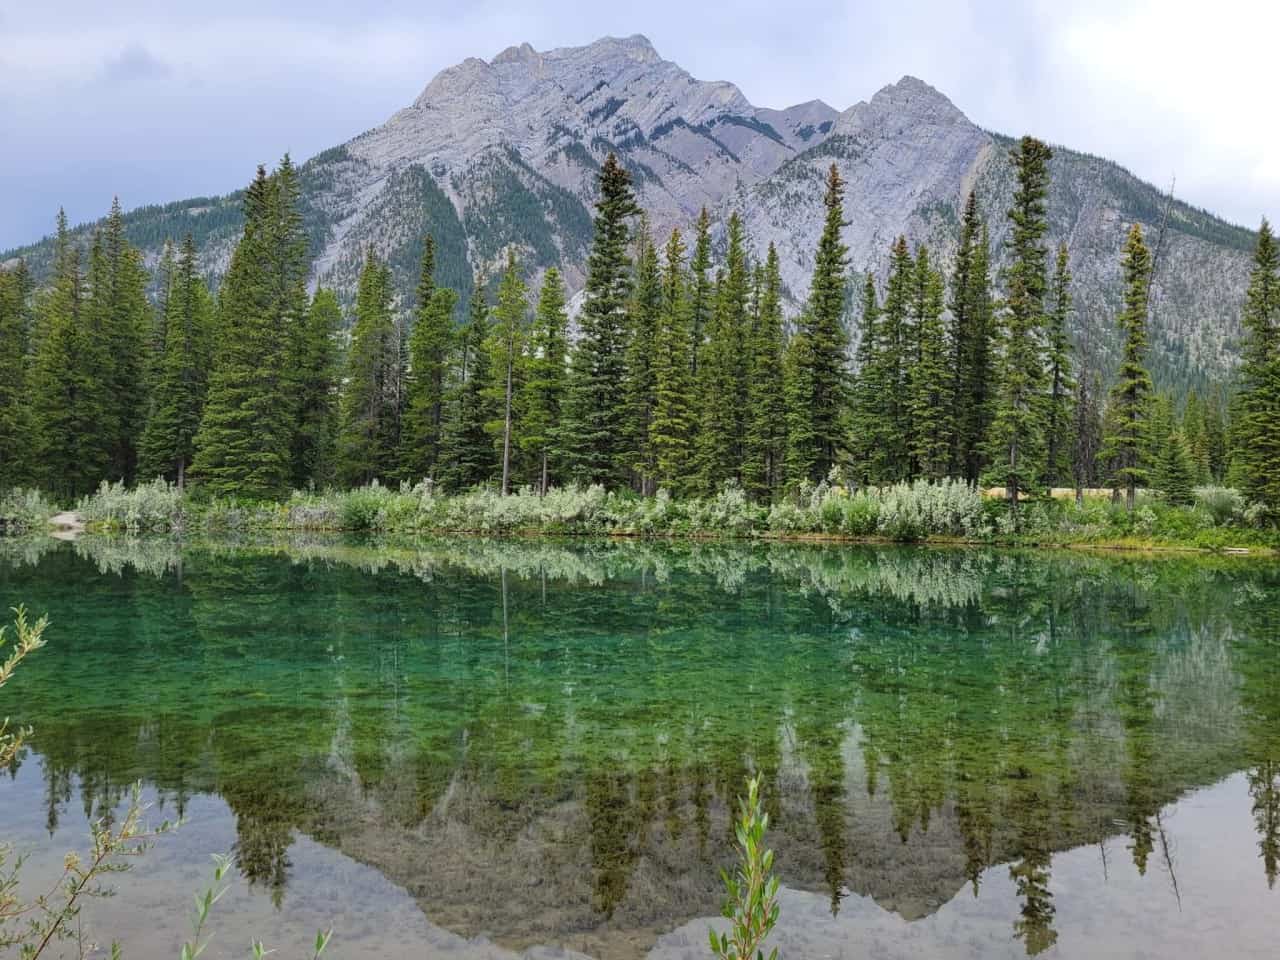 Kananaskis road trip to Mount Lorette Ponds is a Summer Road Trip Idea Near Calgary Alberta Canada.